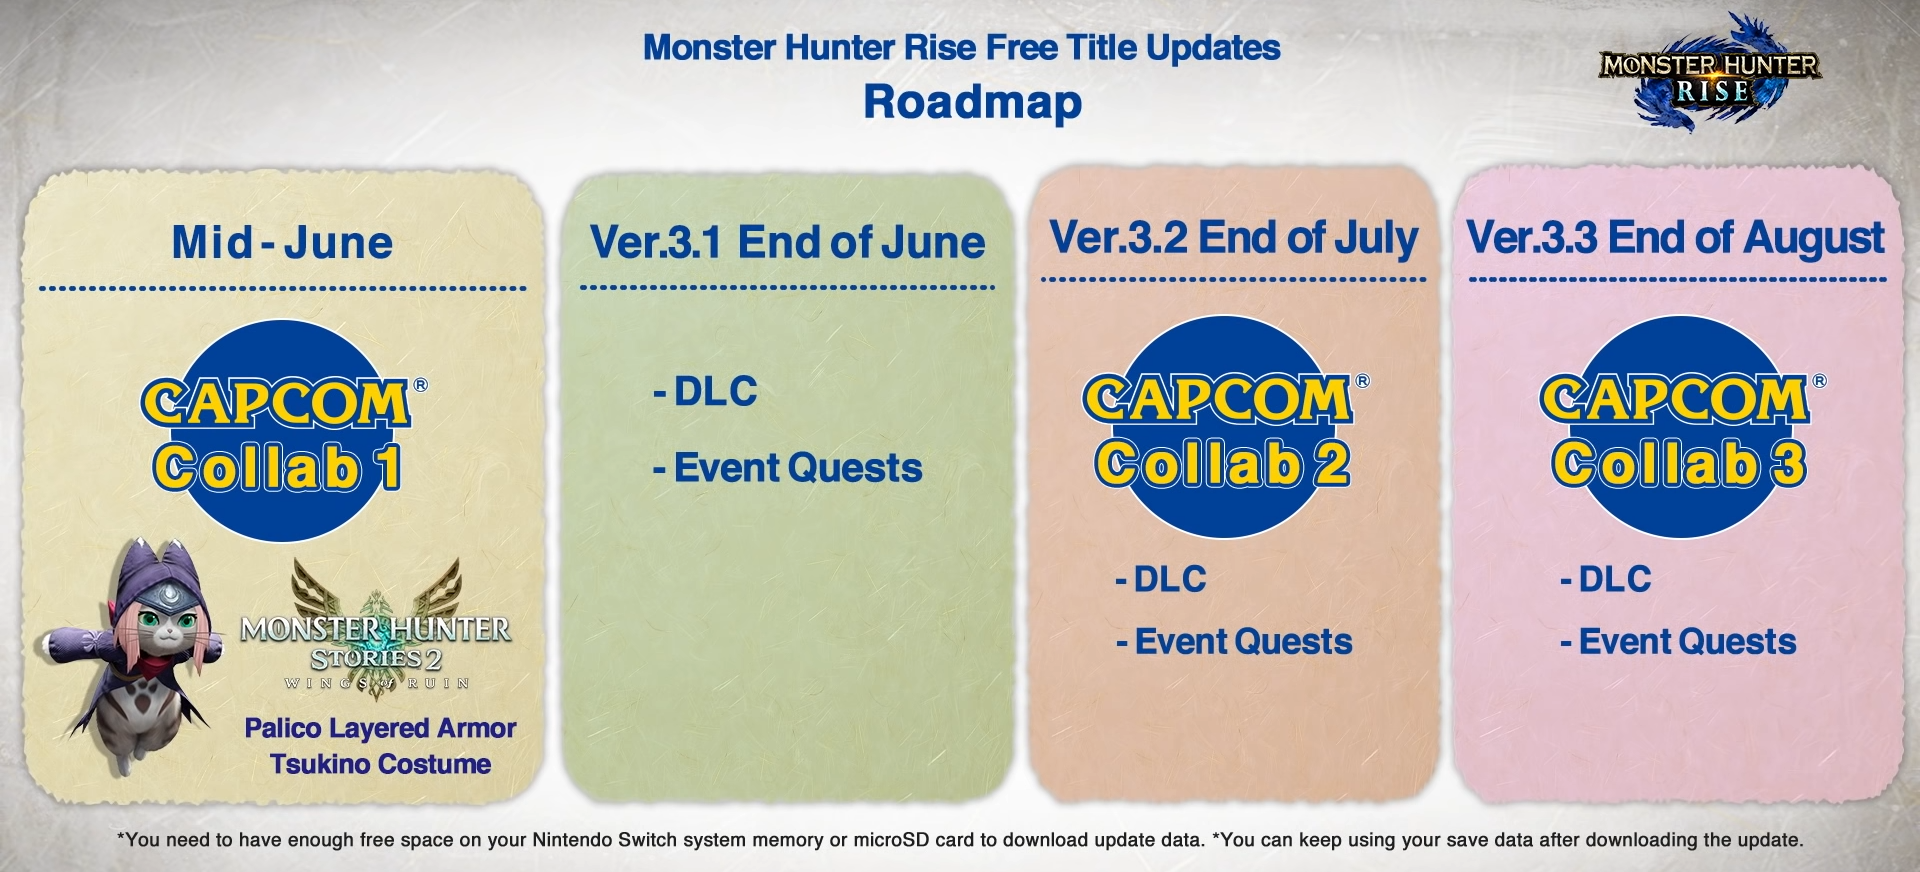 Take on Apex Monsters for New Monster Hunter Rise Titles